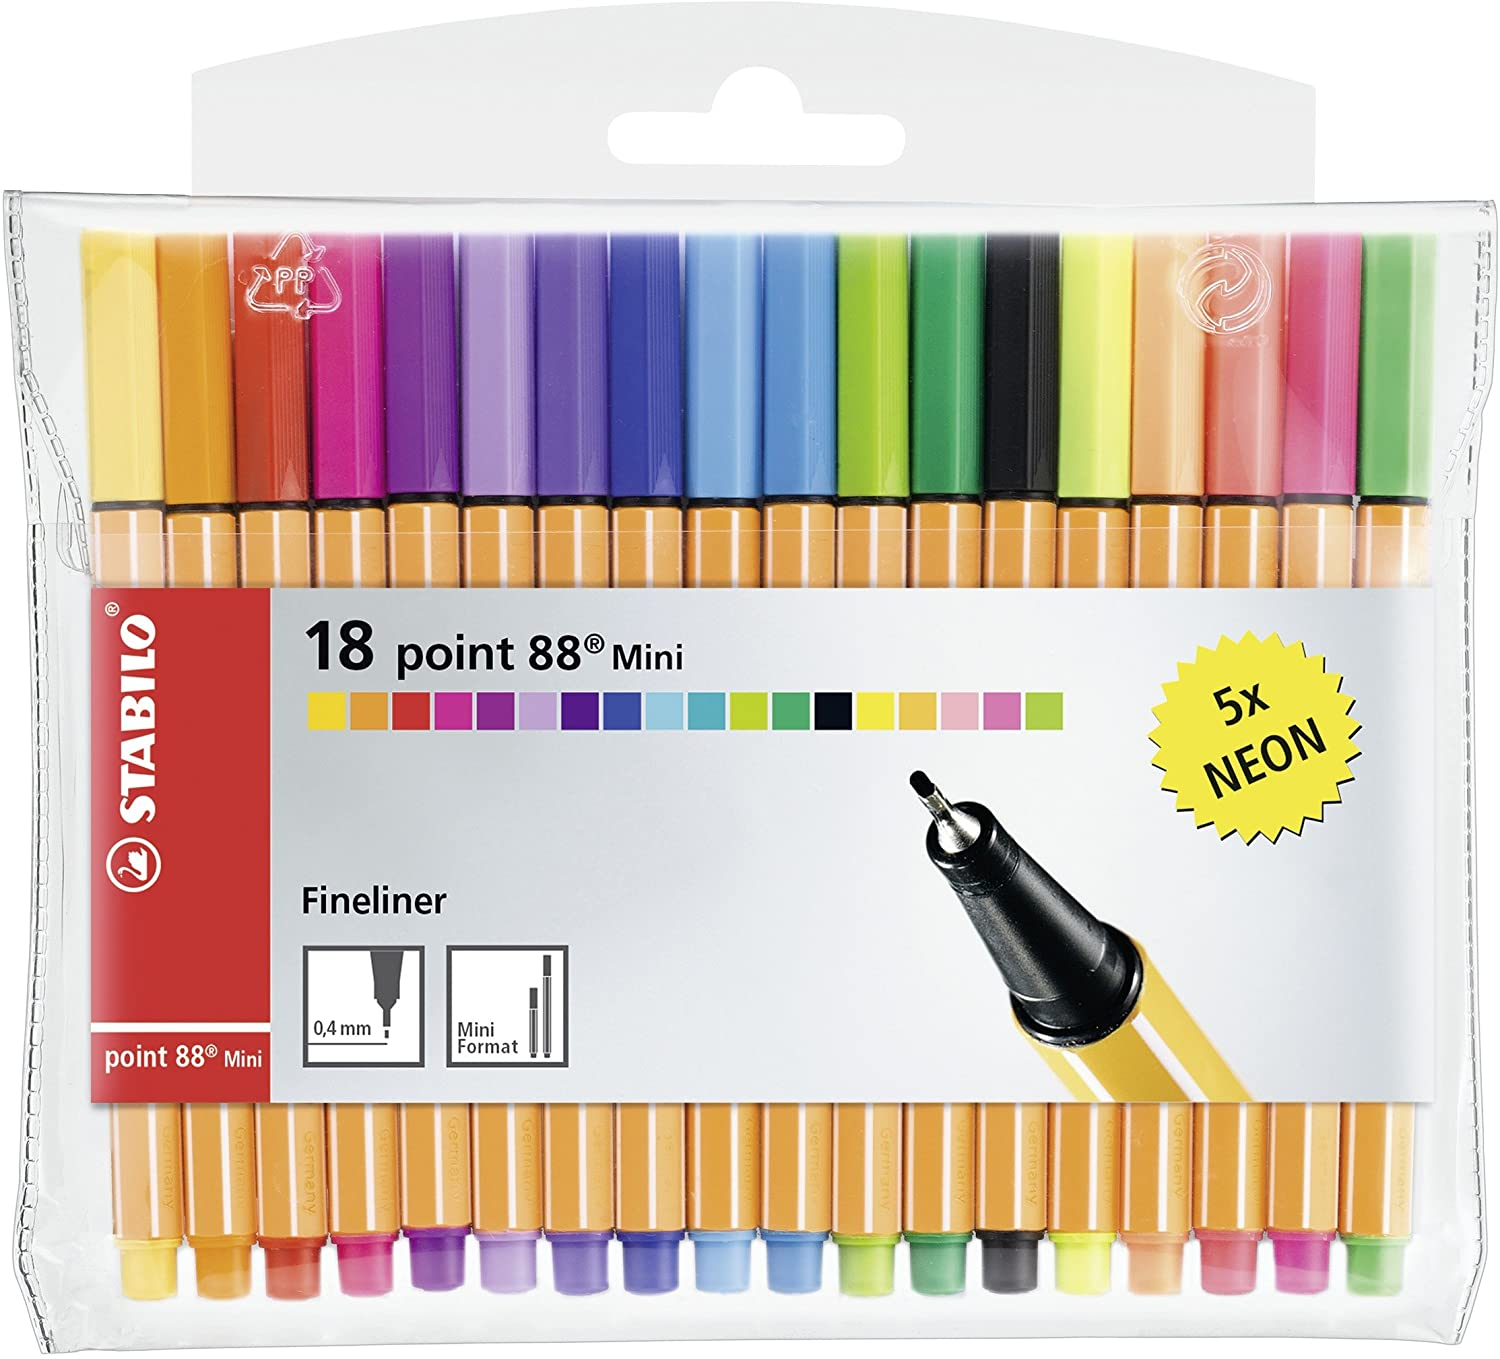 https://www.e-statuts.com/media/catalog/product/p/h/photo-688-18-2-stabilo-stylos-feutres-fineliner-point-88-mini-fluo.jpg